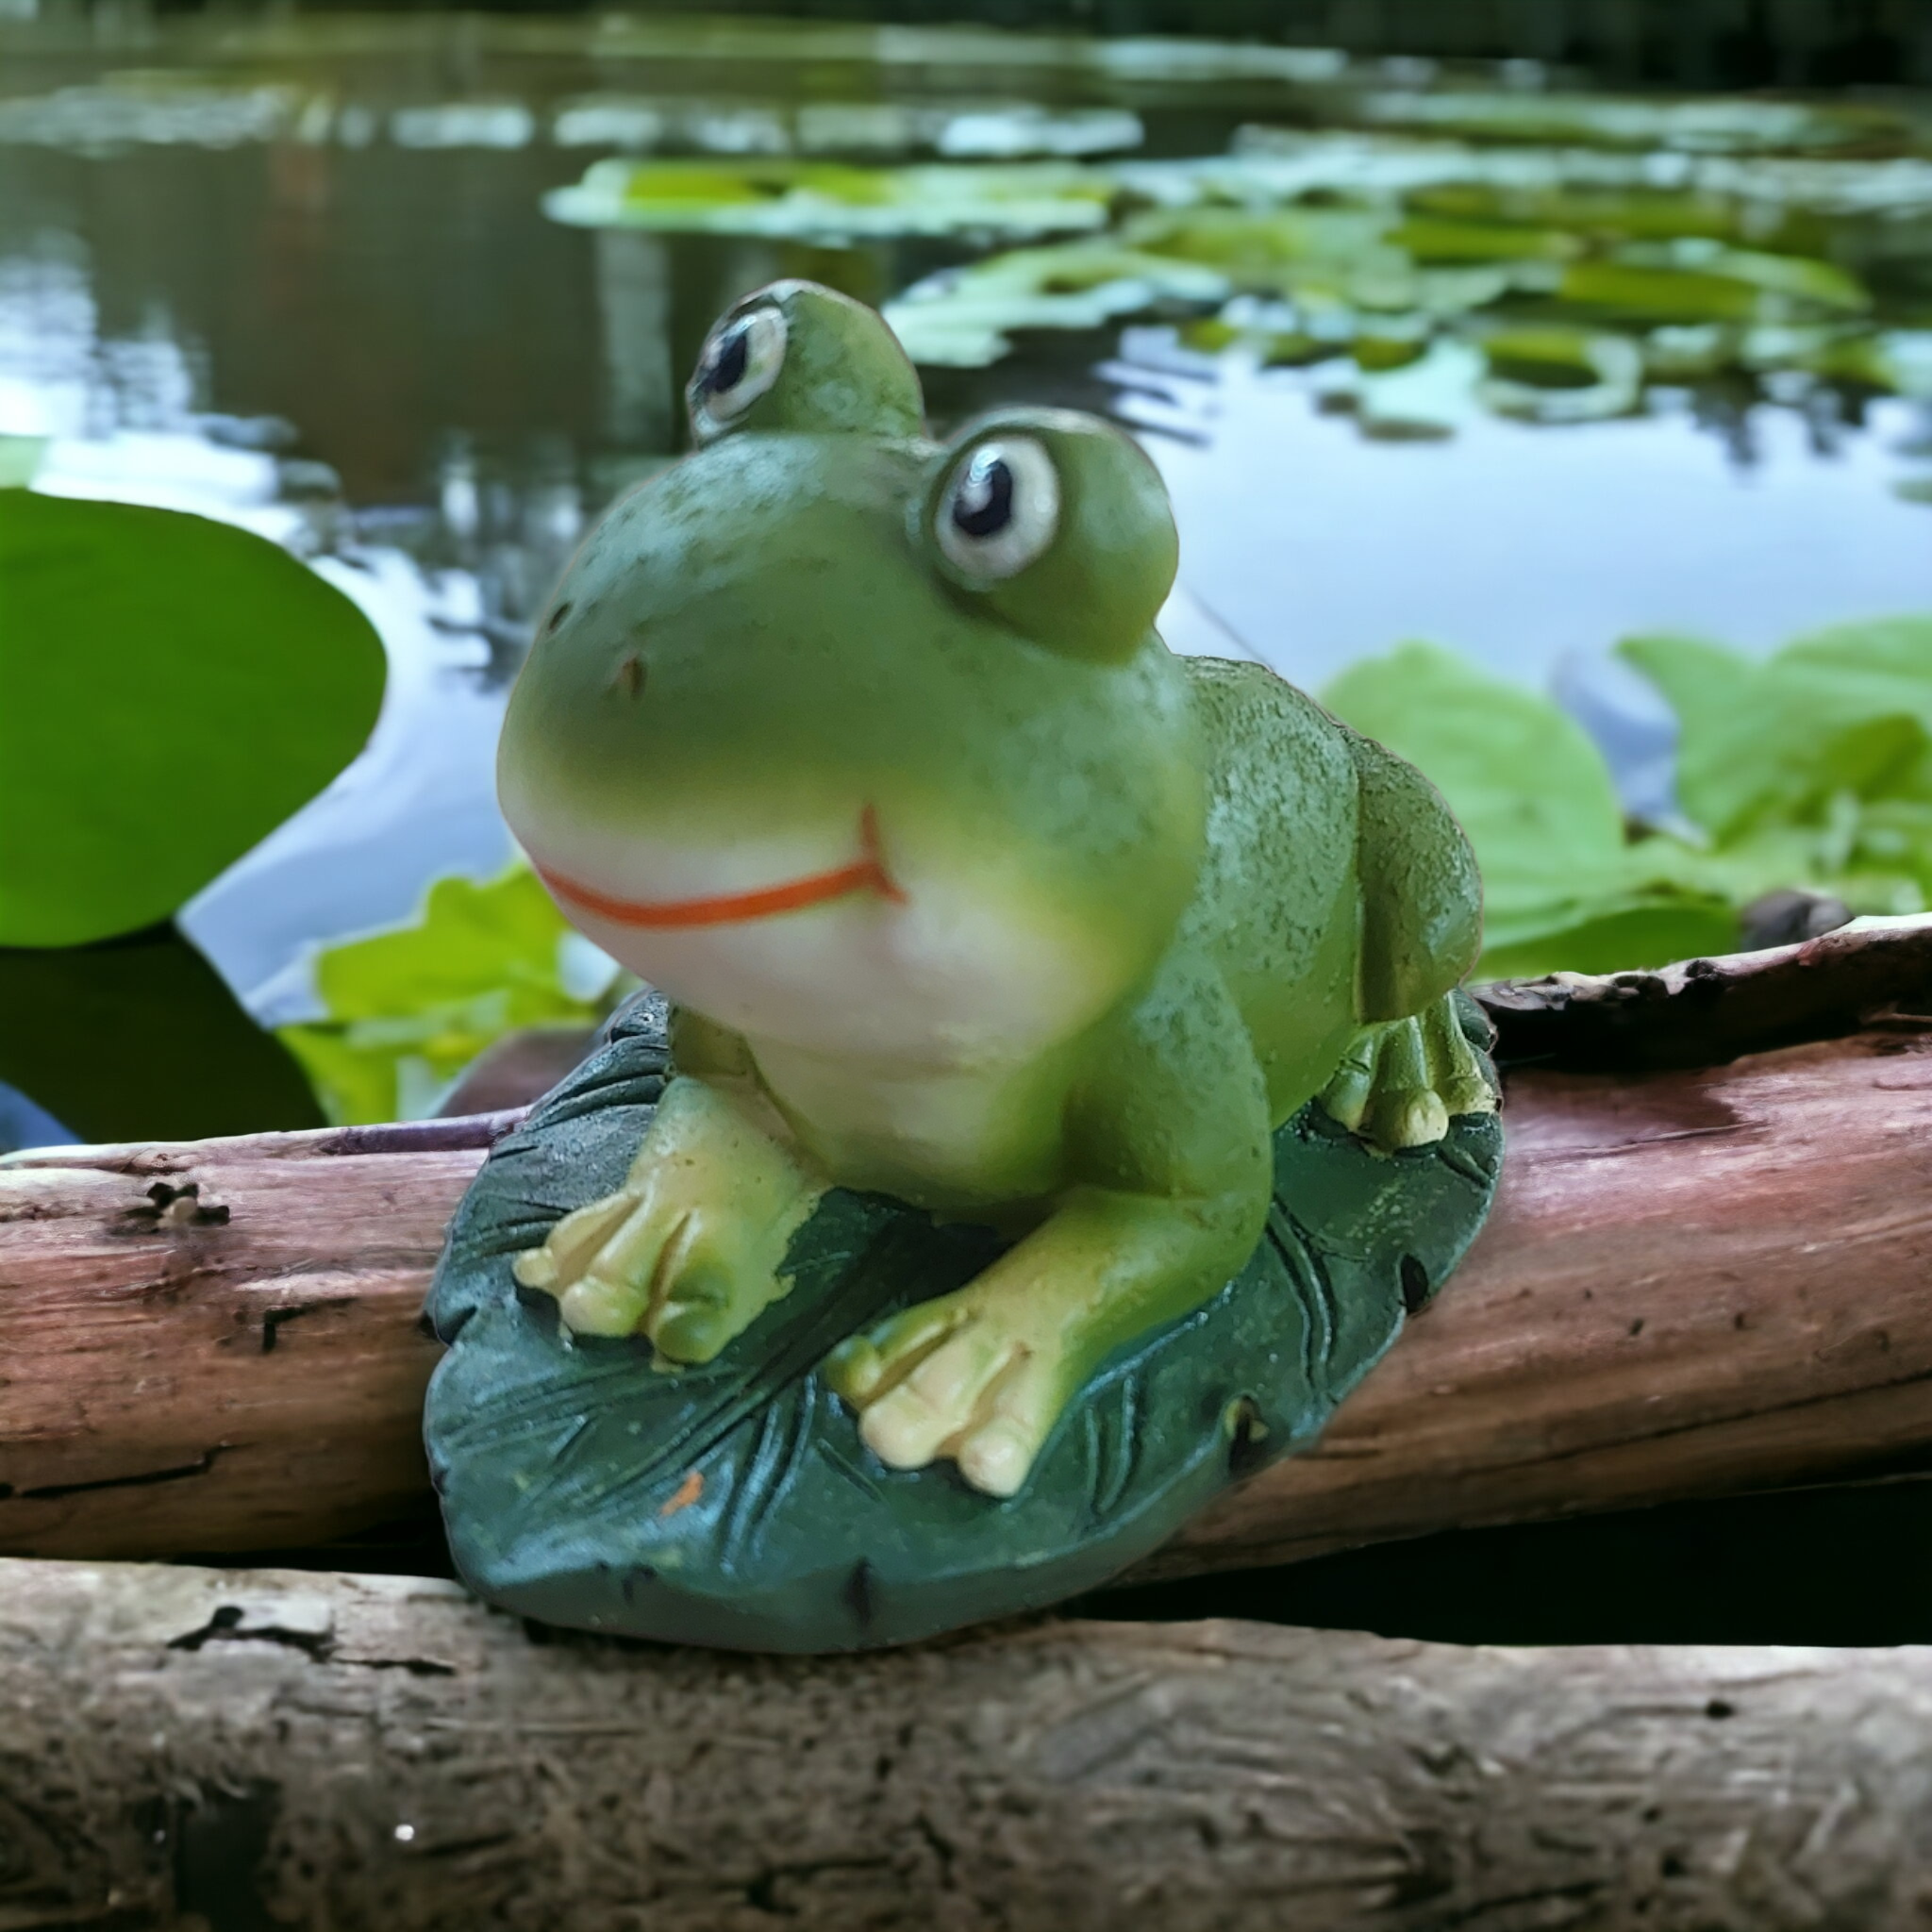 Gardens Accessories Frog on leaf